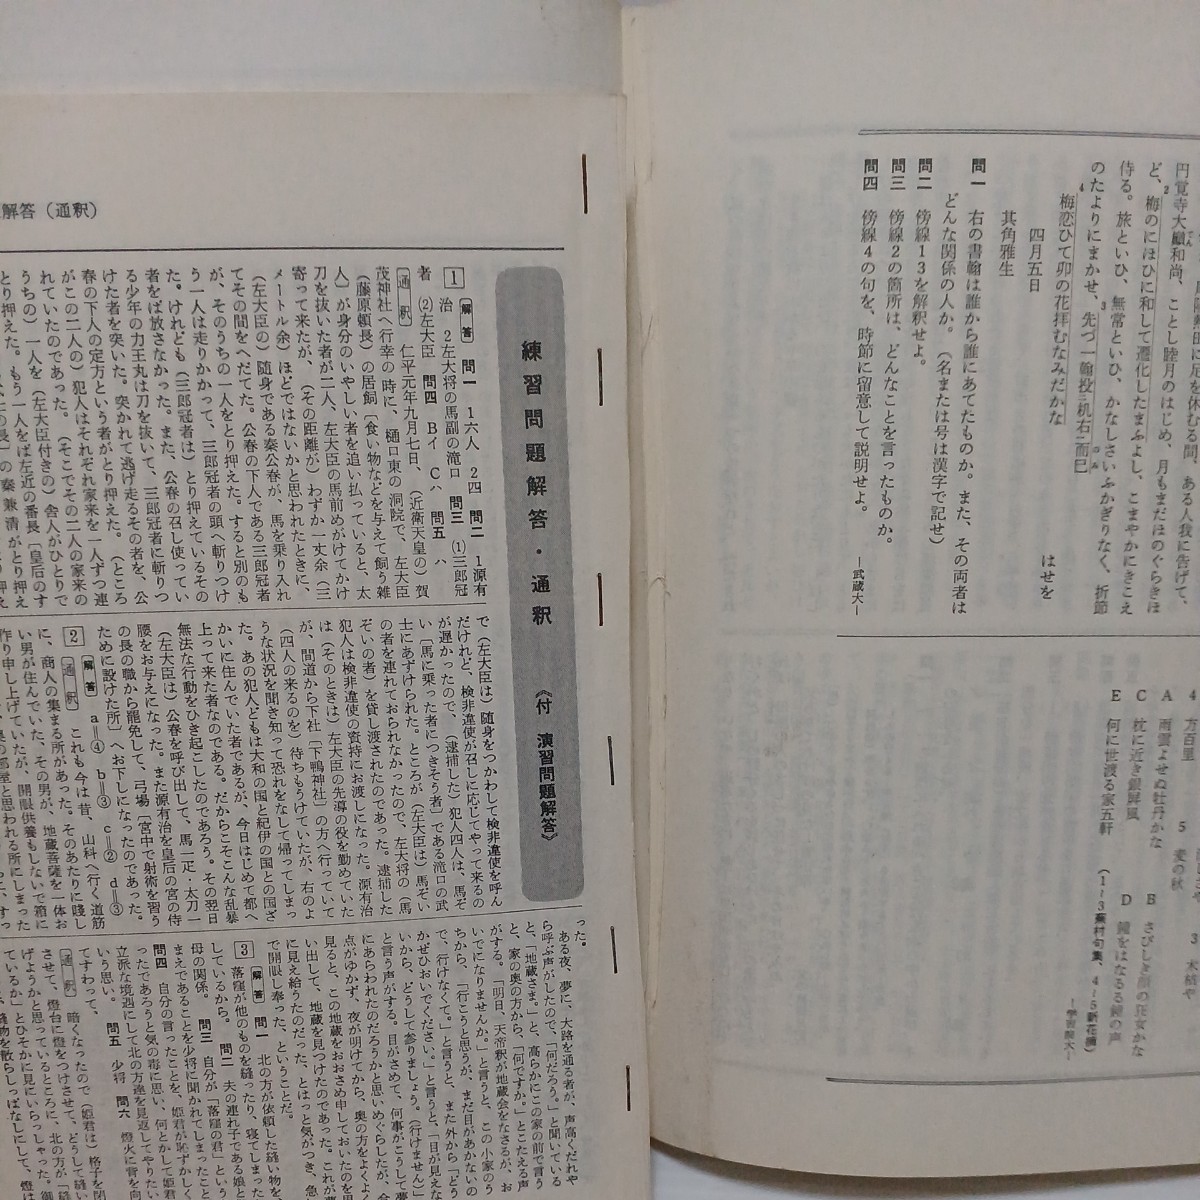  put on eye . thought person old writing. ... wistaria . basis * Watanabe real work Showa era 51 year 